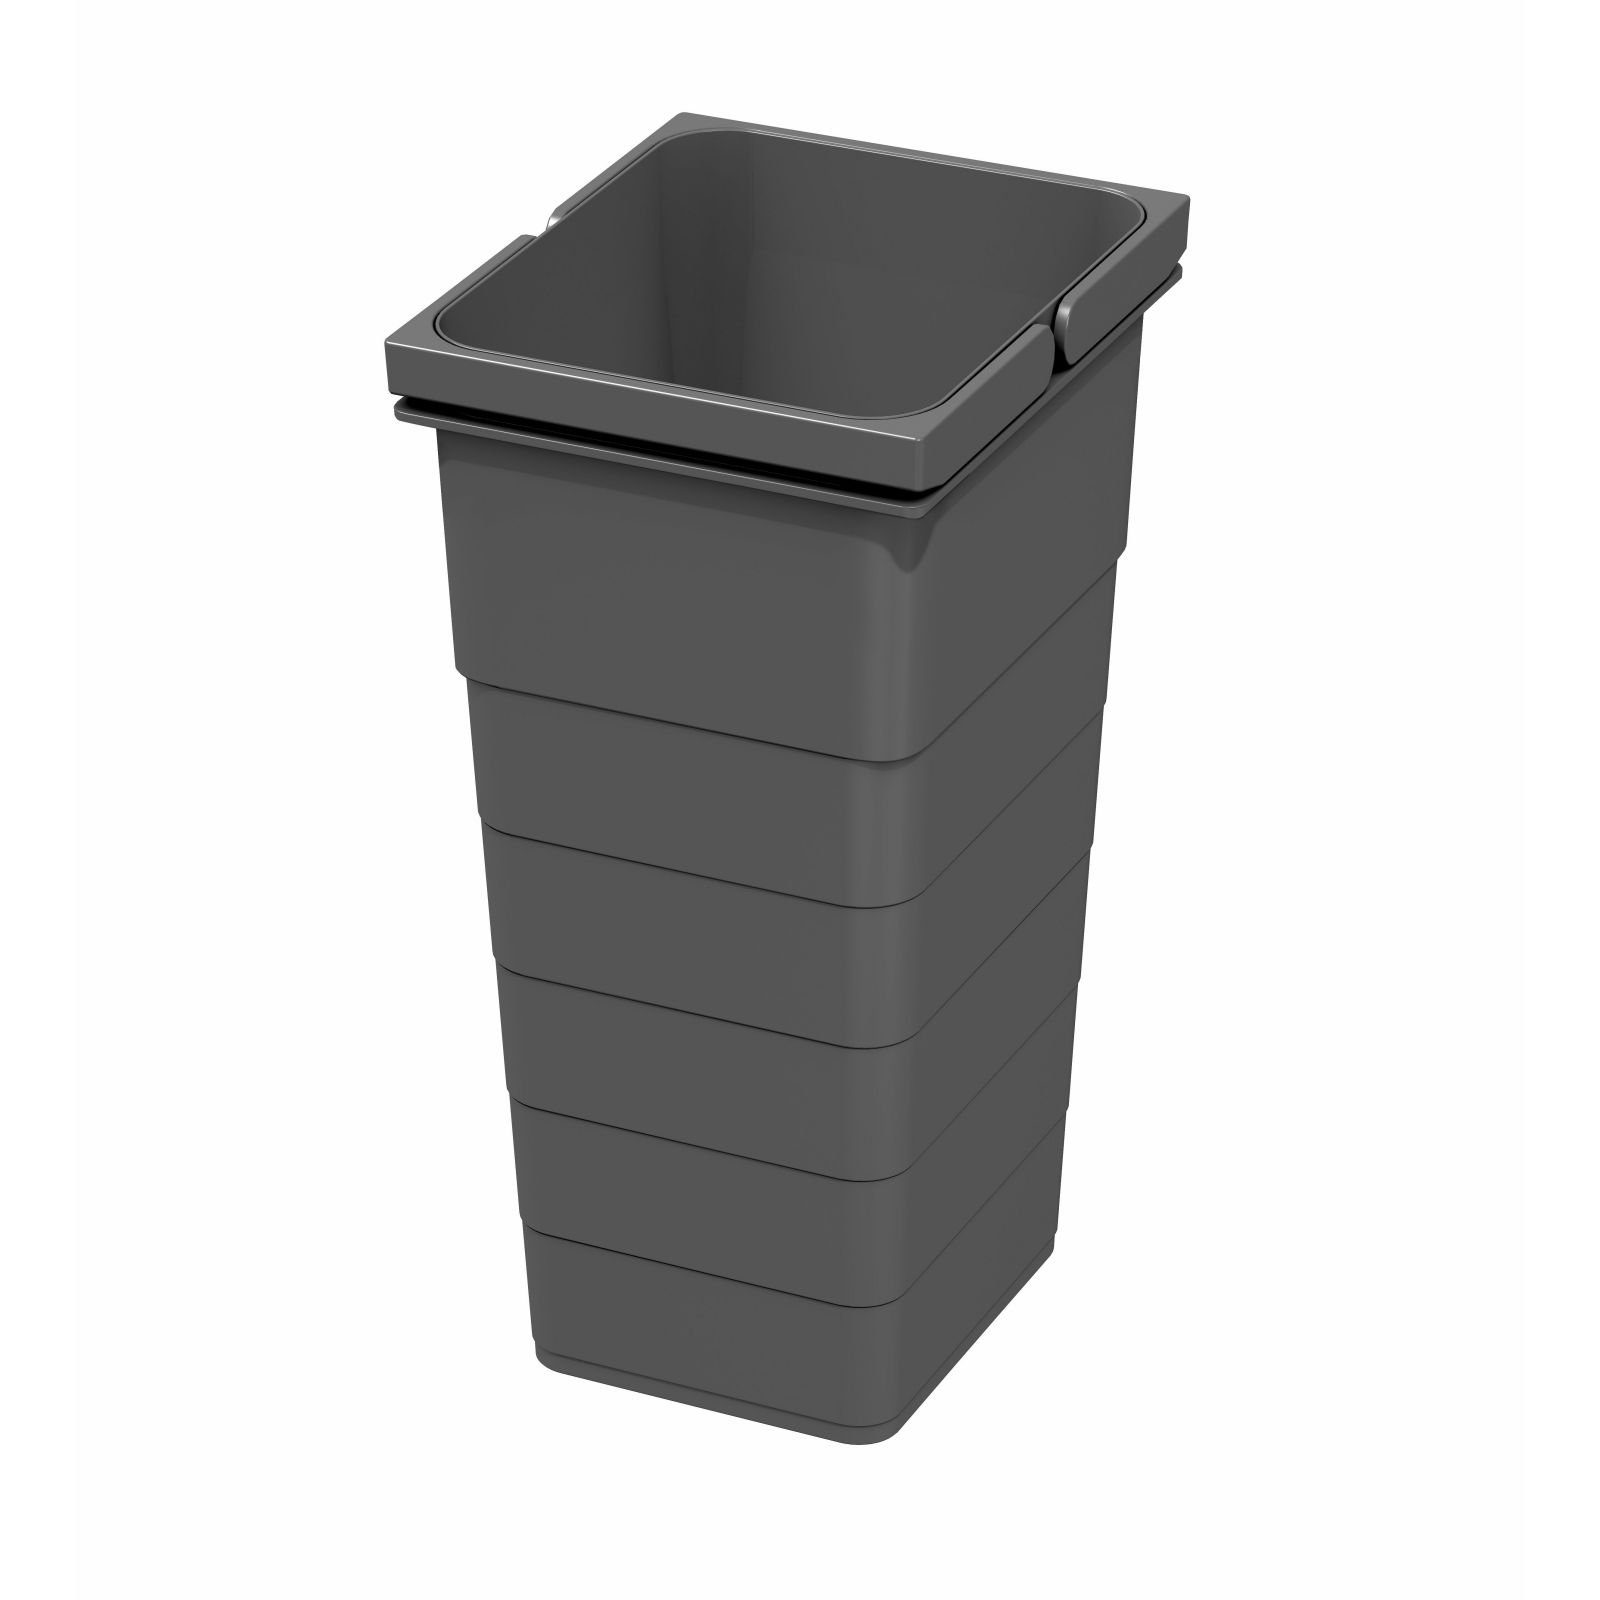 Liter, dunkelgrau mm eins2vier mm 205 Recycling Höhe: Abfallsammler 229 SO-TECH® Mülltrennsystem Ninka x Volumen: 11,5 330 Behälter Abfall